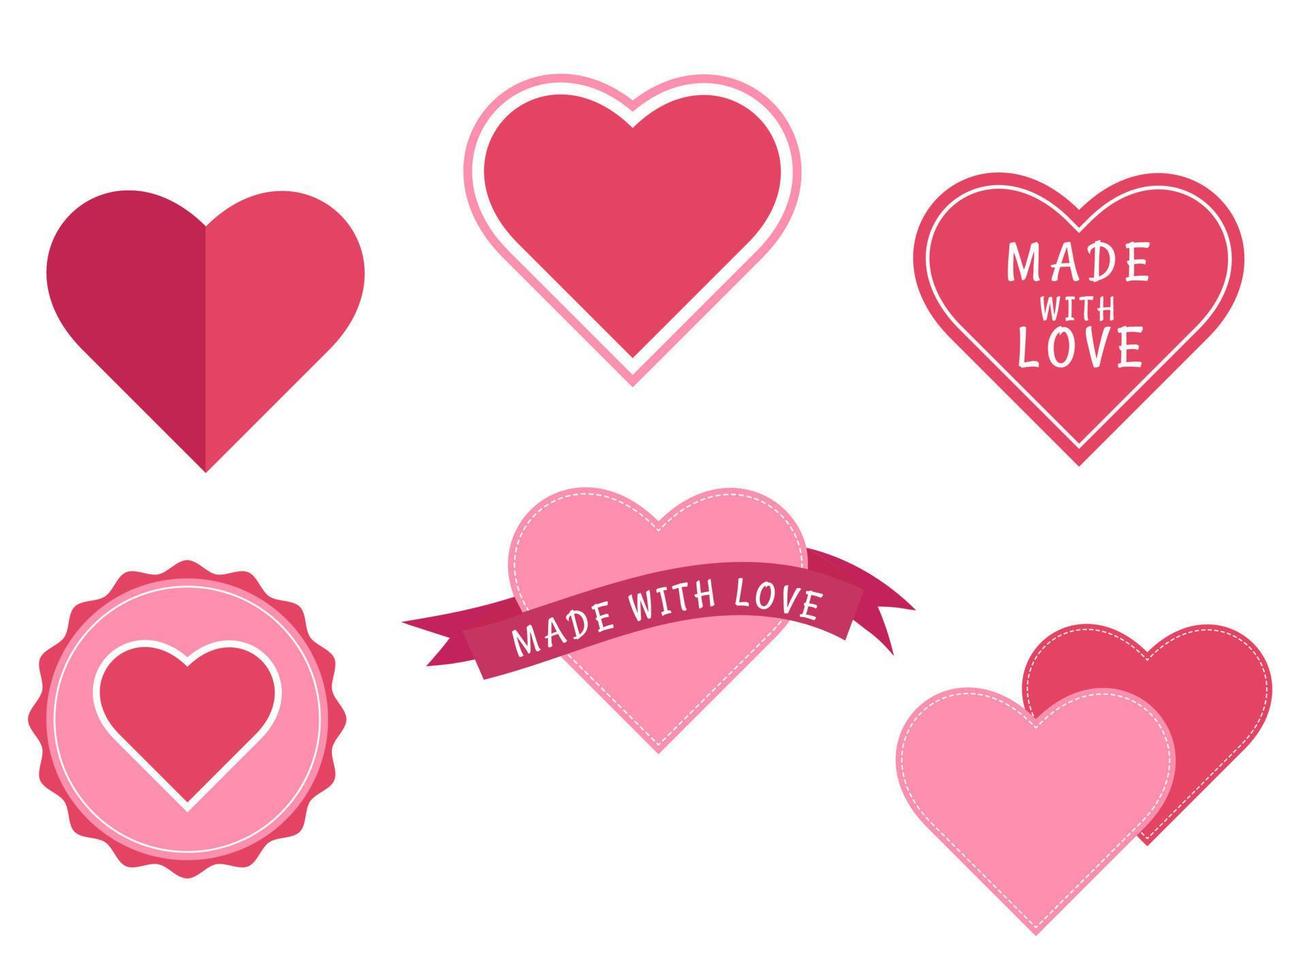 diseño plano, hecho con sellos de amor. corazón, amor, romance o día de san valentín. ilustración vectorial vector